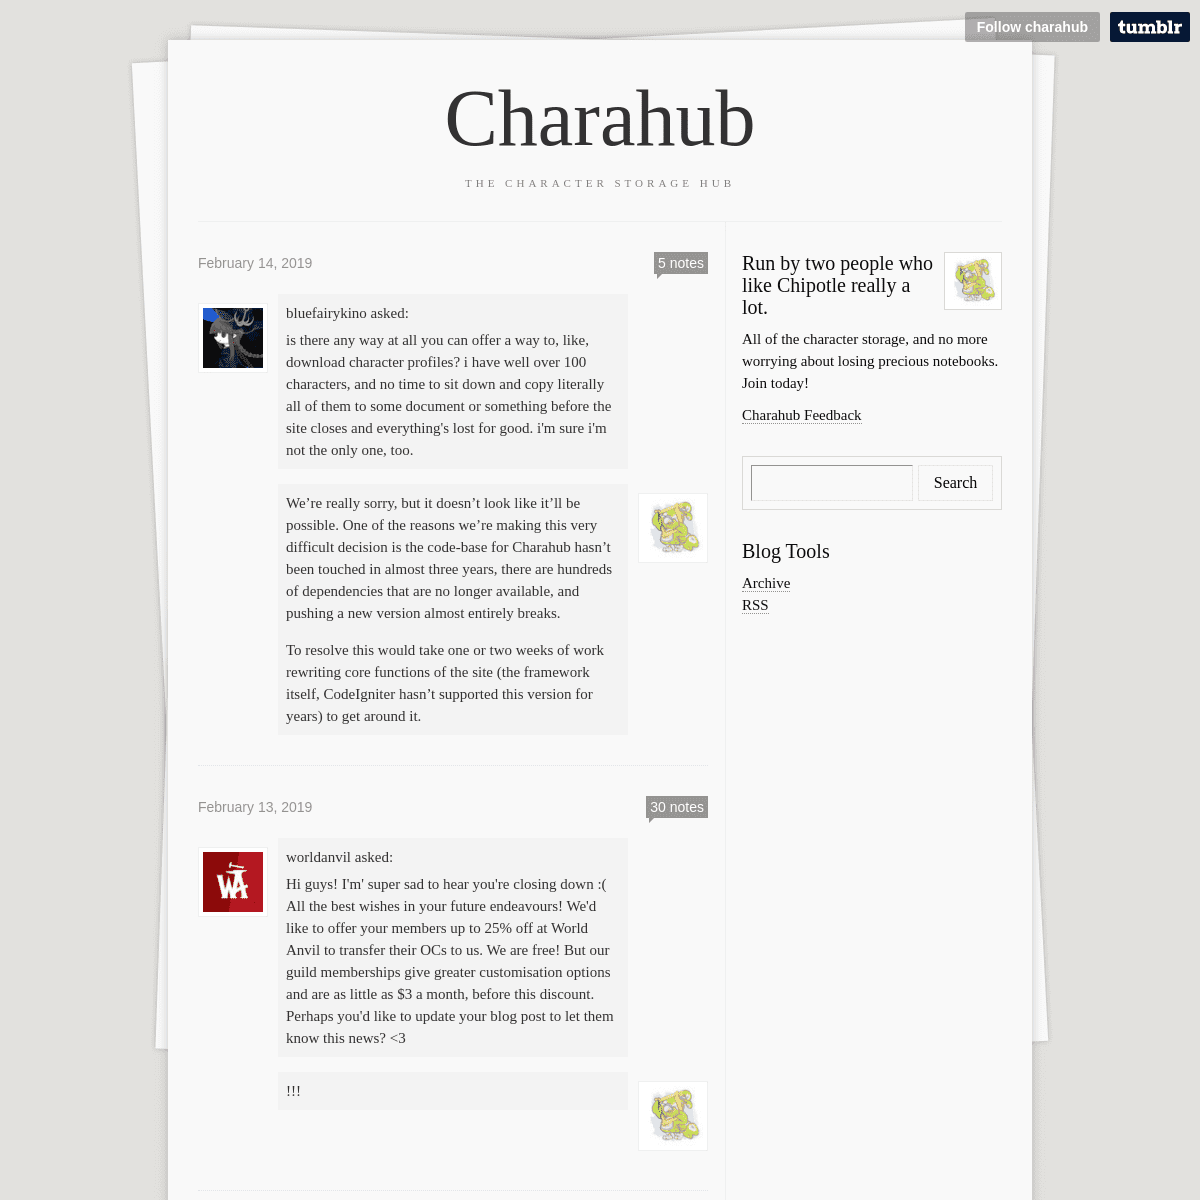 A complete backup of charahub.tumblr.com